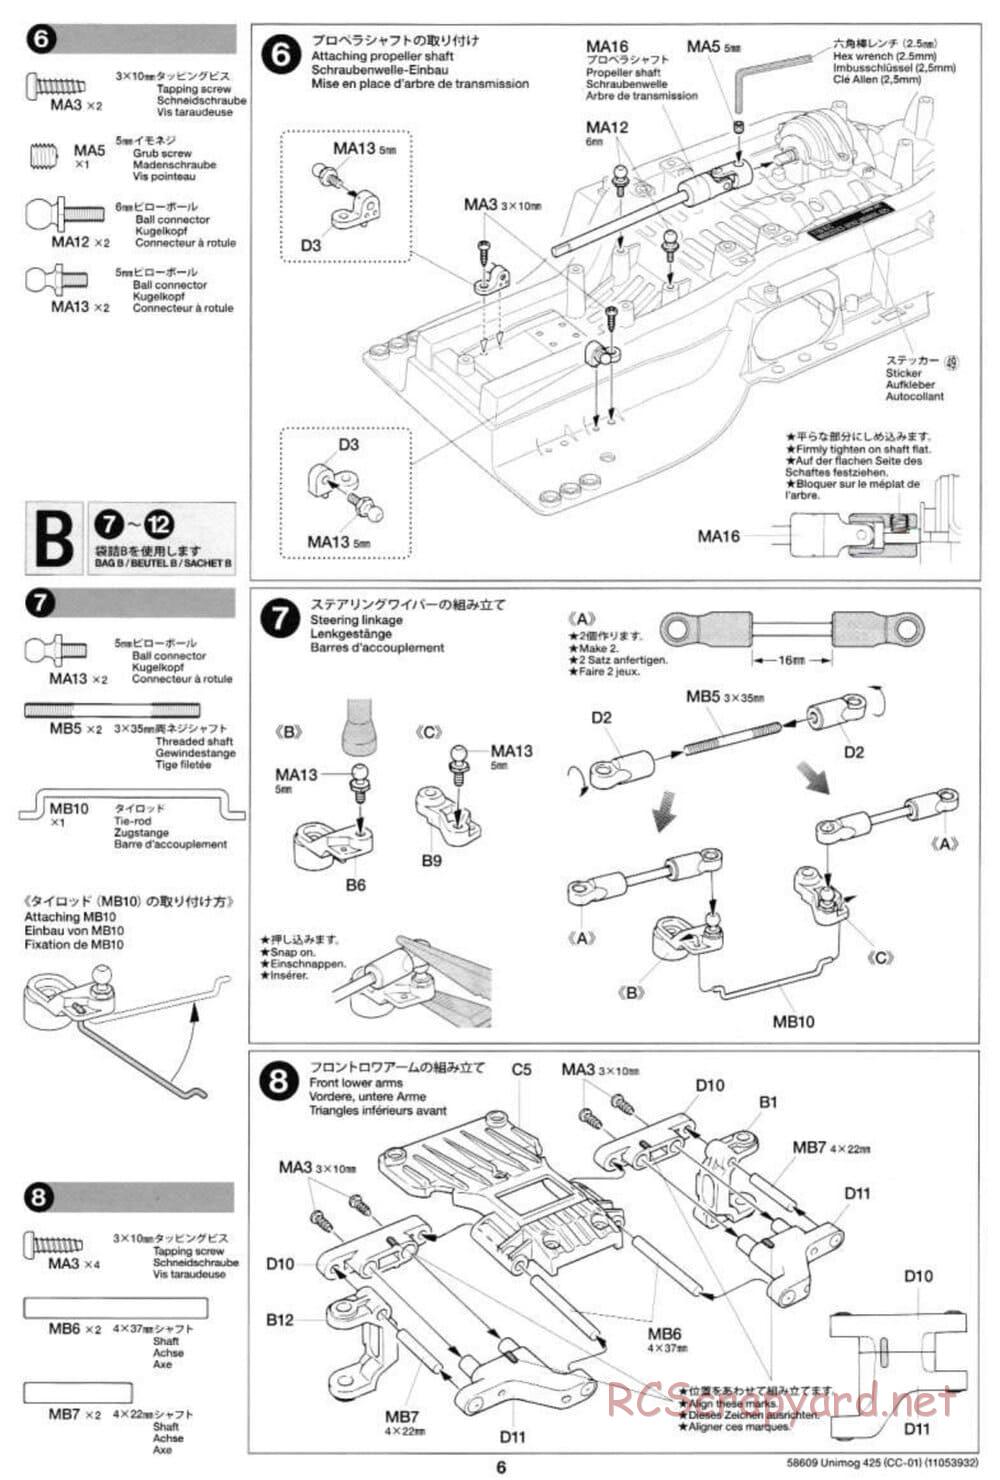 Tamiya - Mercedes-Benz Unimog 425 - CC-01 Chassis - Manual - Page 6